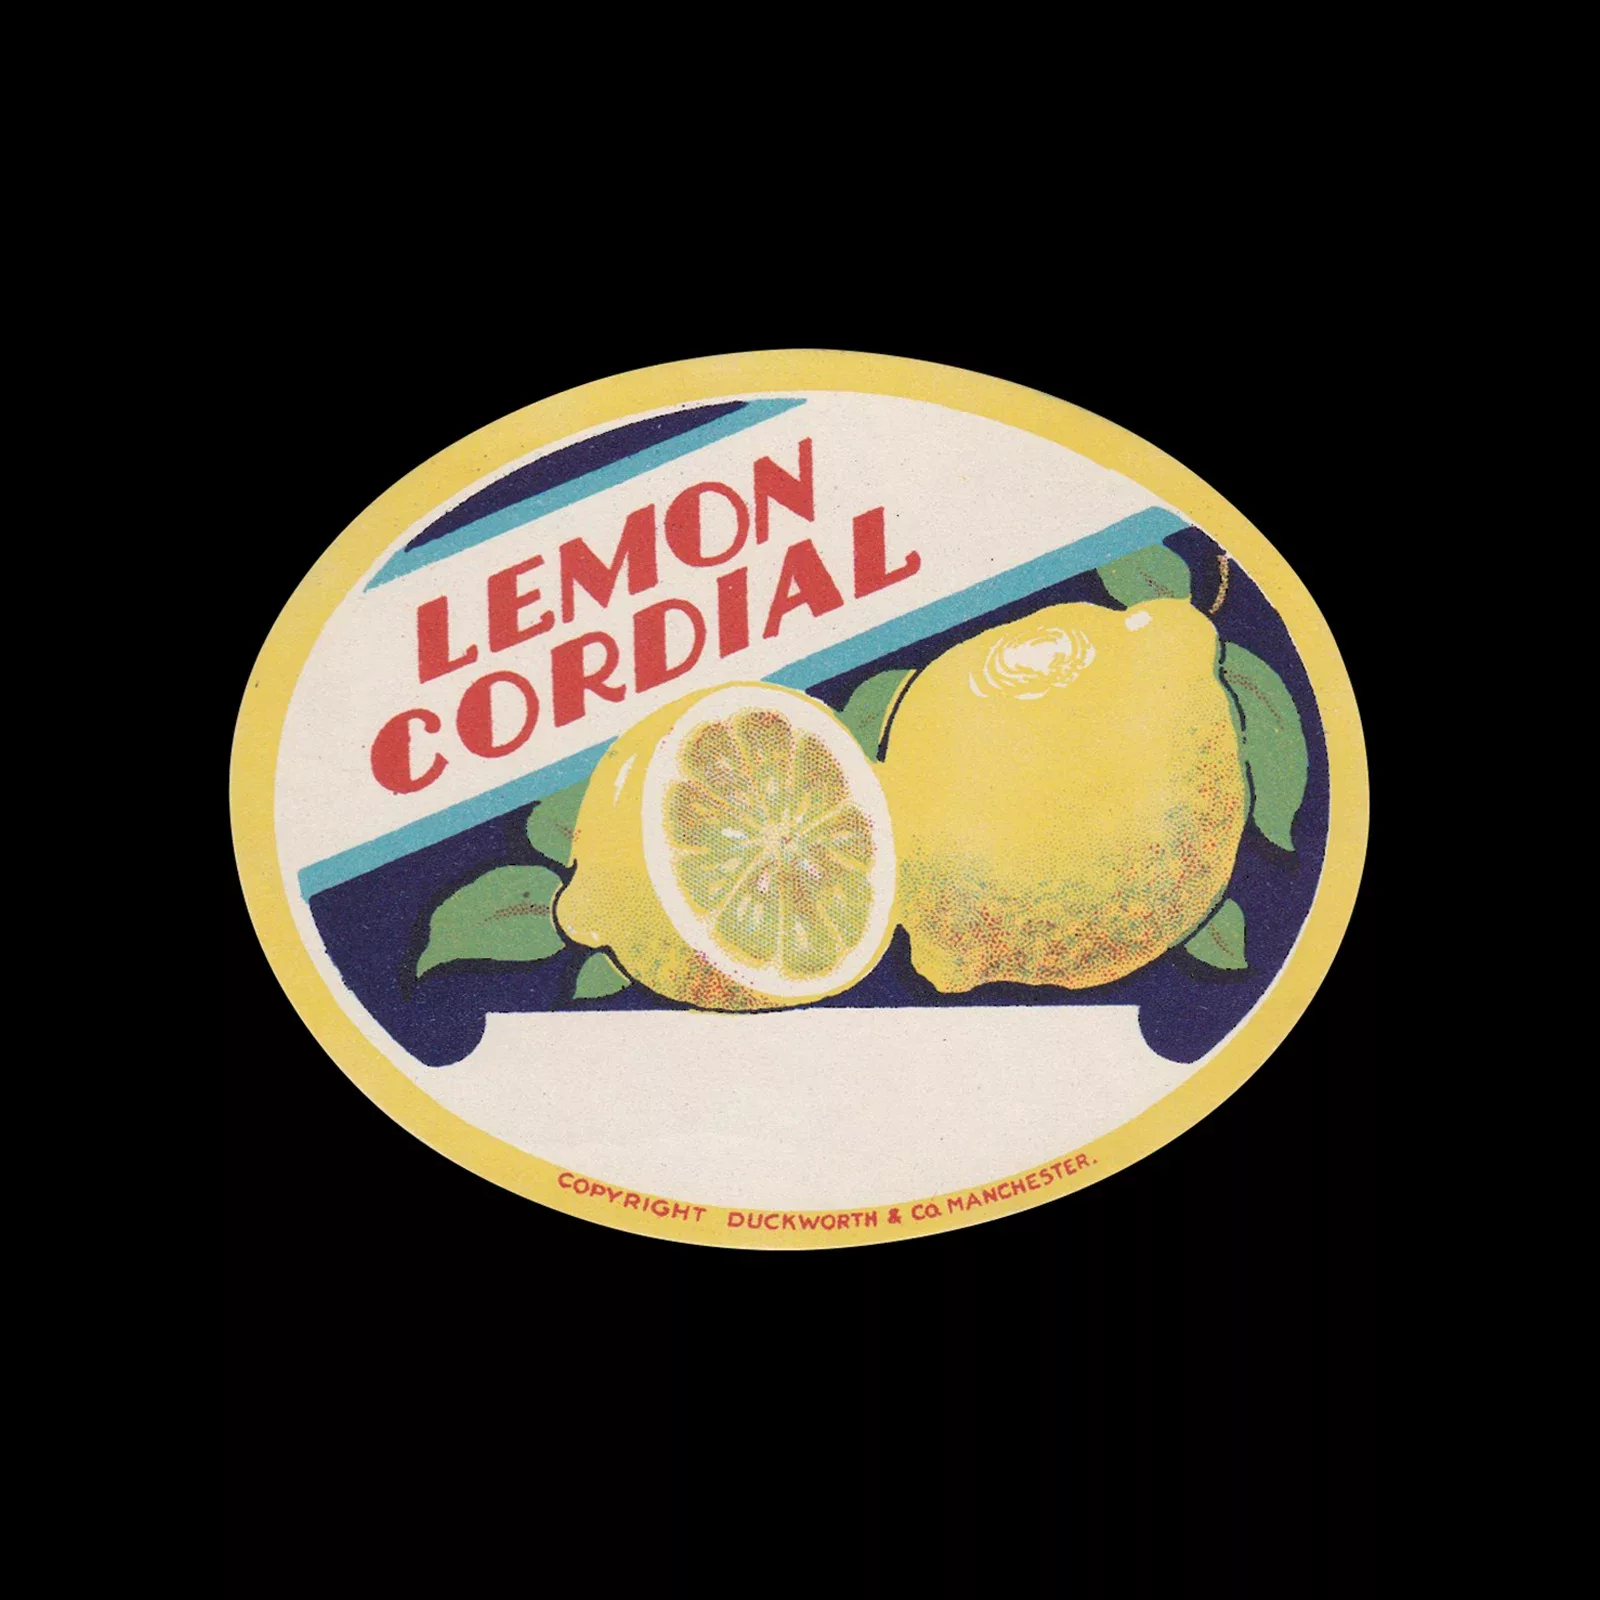 Lemon Cordial, Fruit Drink Label